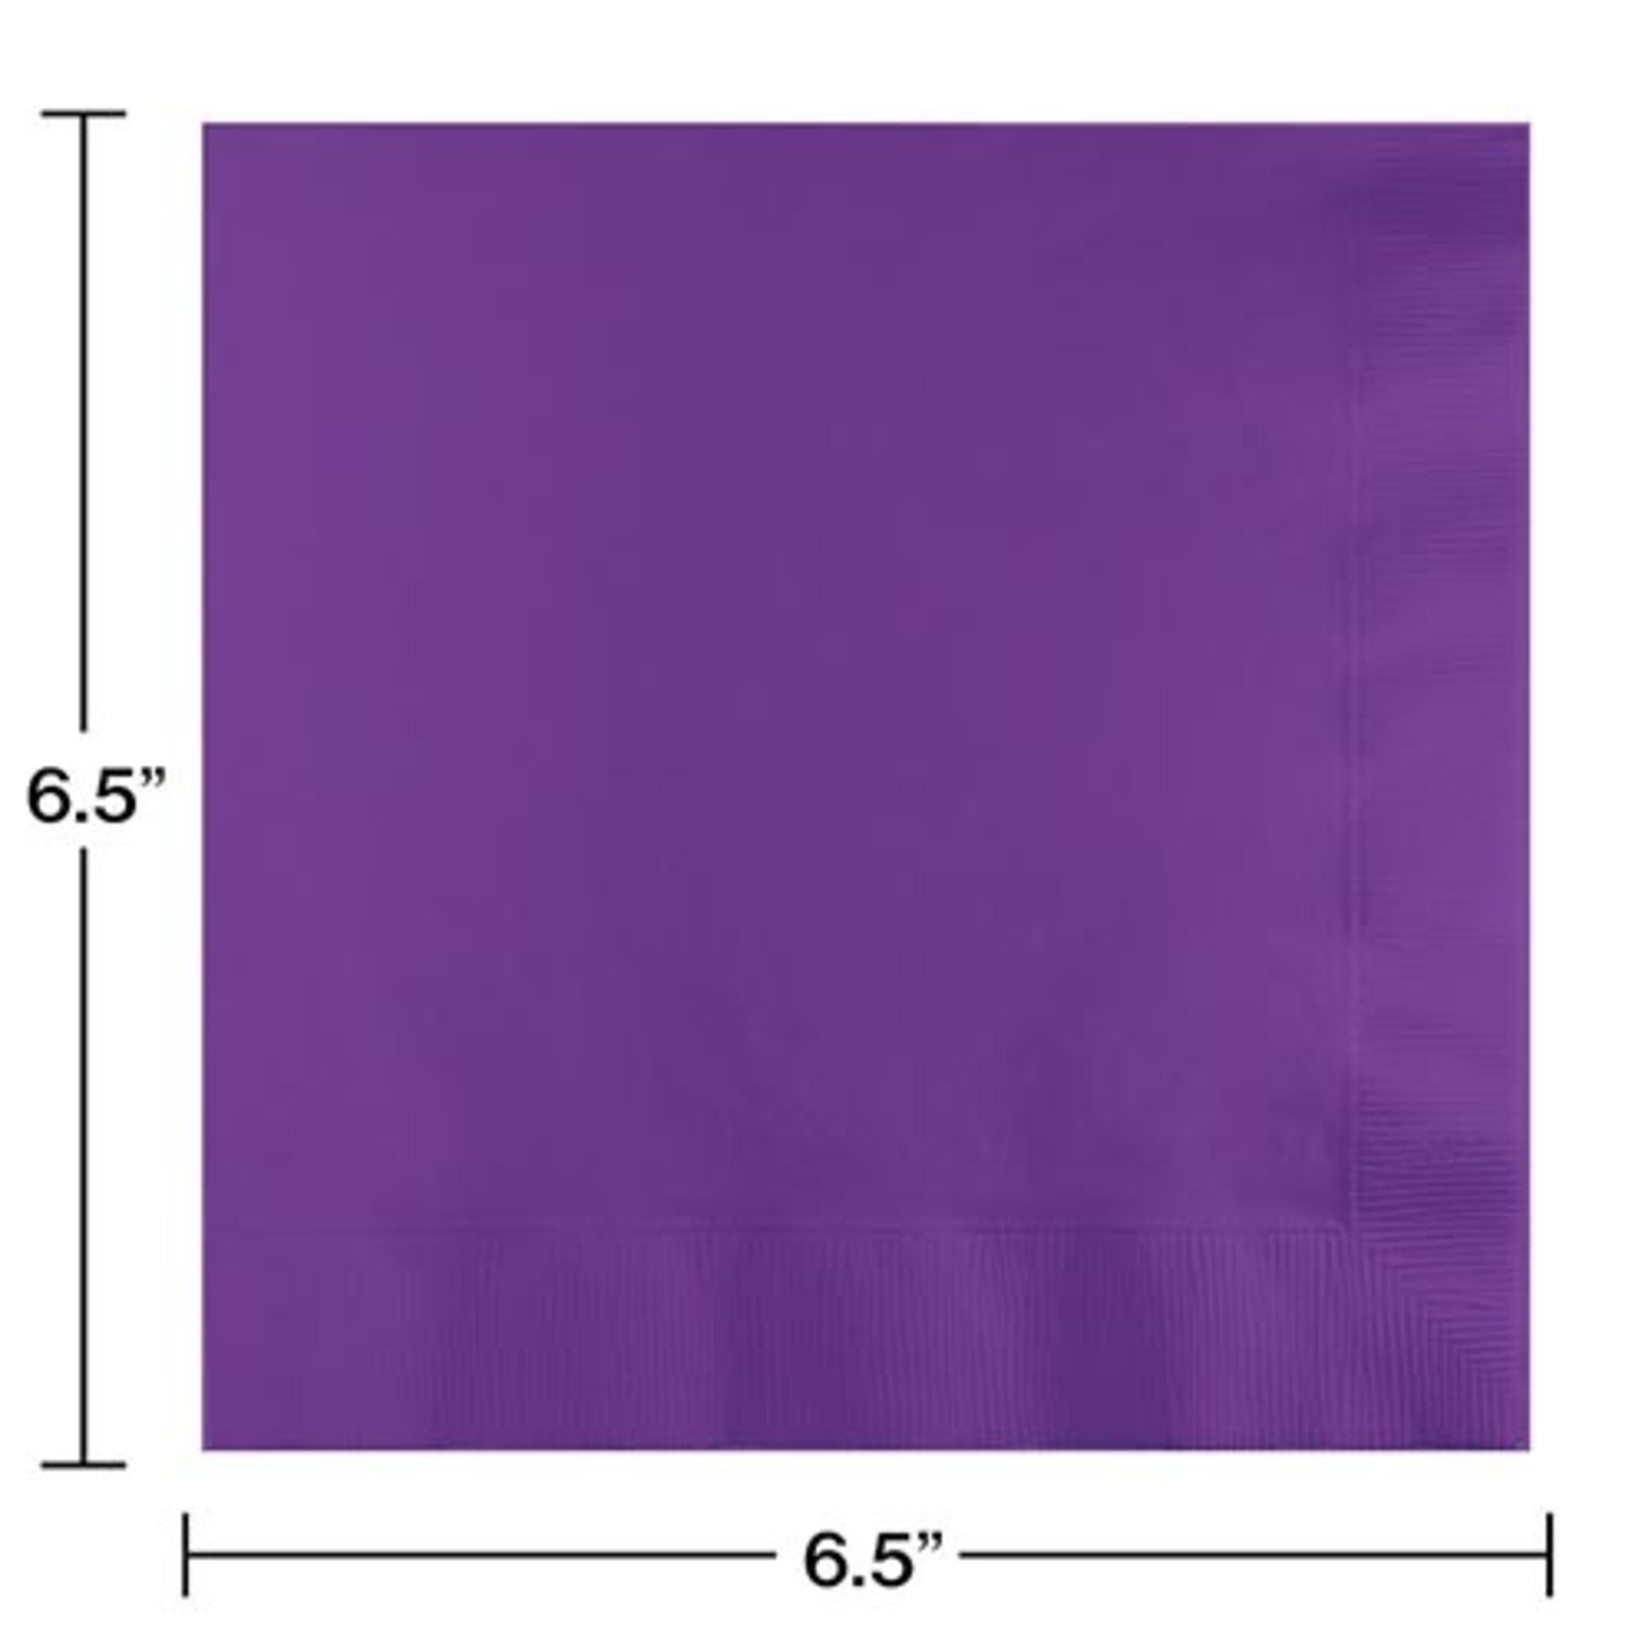 TCOLR Amethyst Purple Lunch Napkins - 50ct.